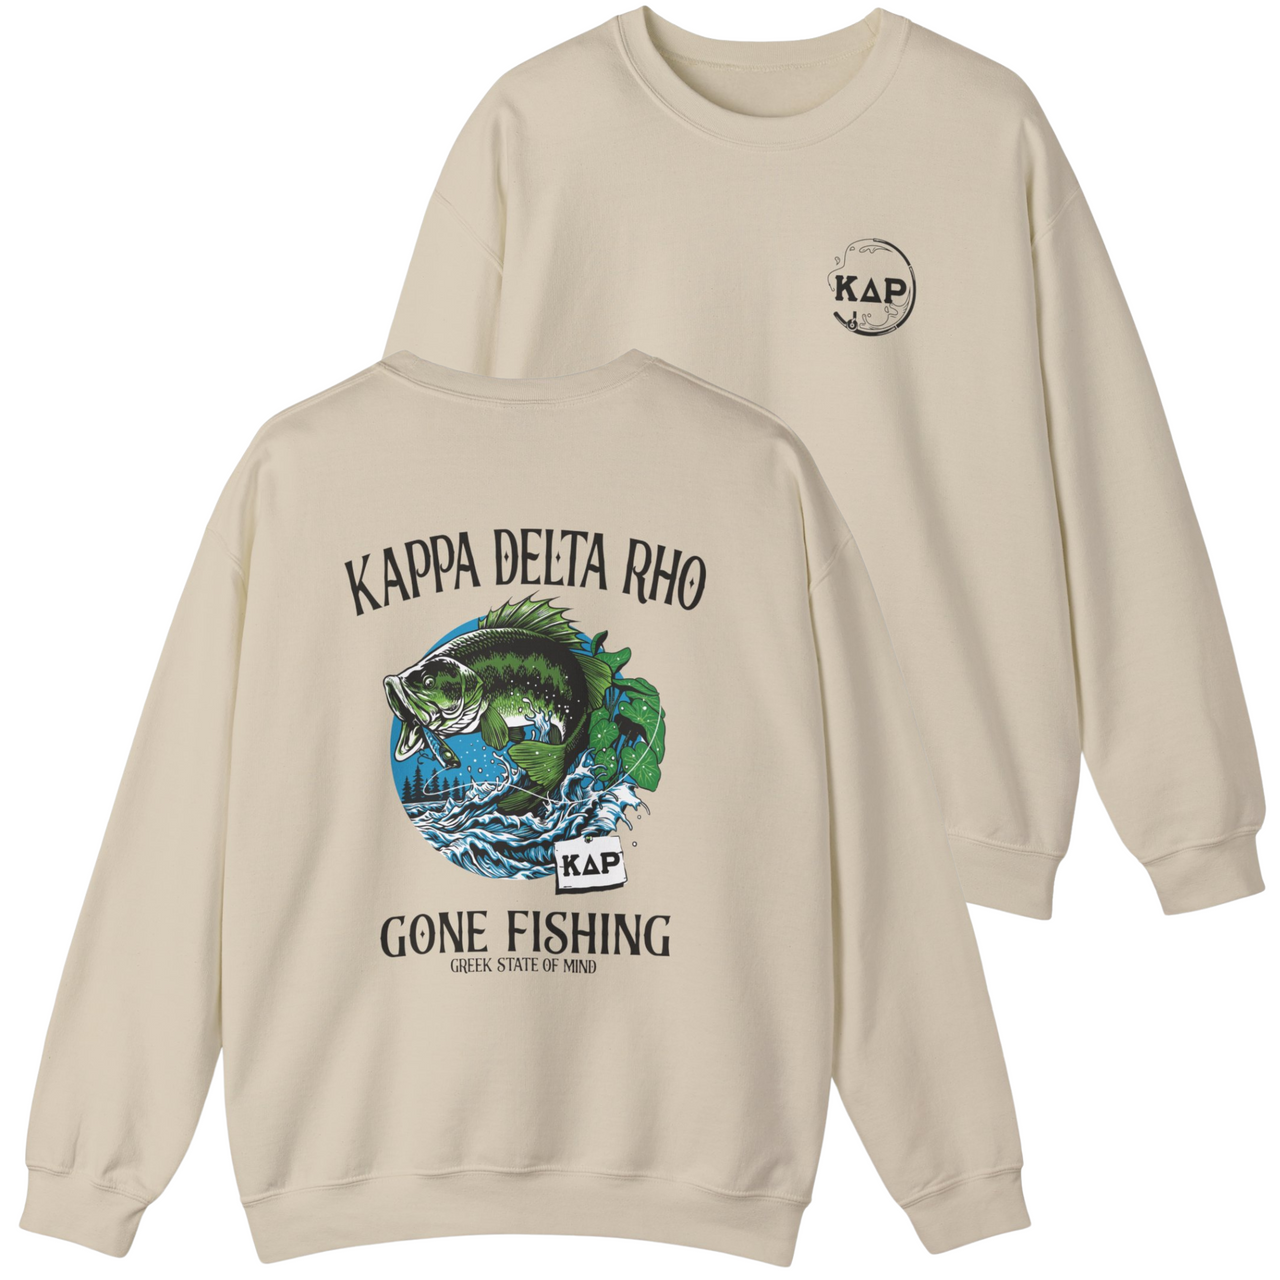 Kappa Delta Rho Graphic Crewneck Sweatshirt | Gone Fishing